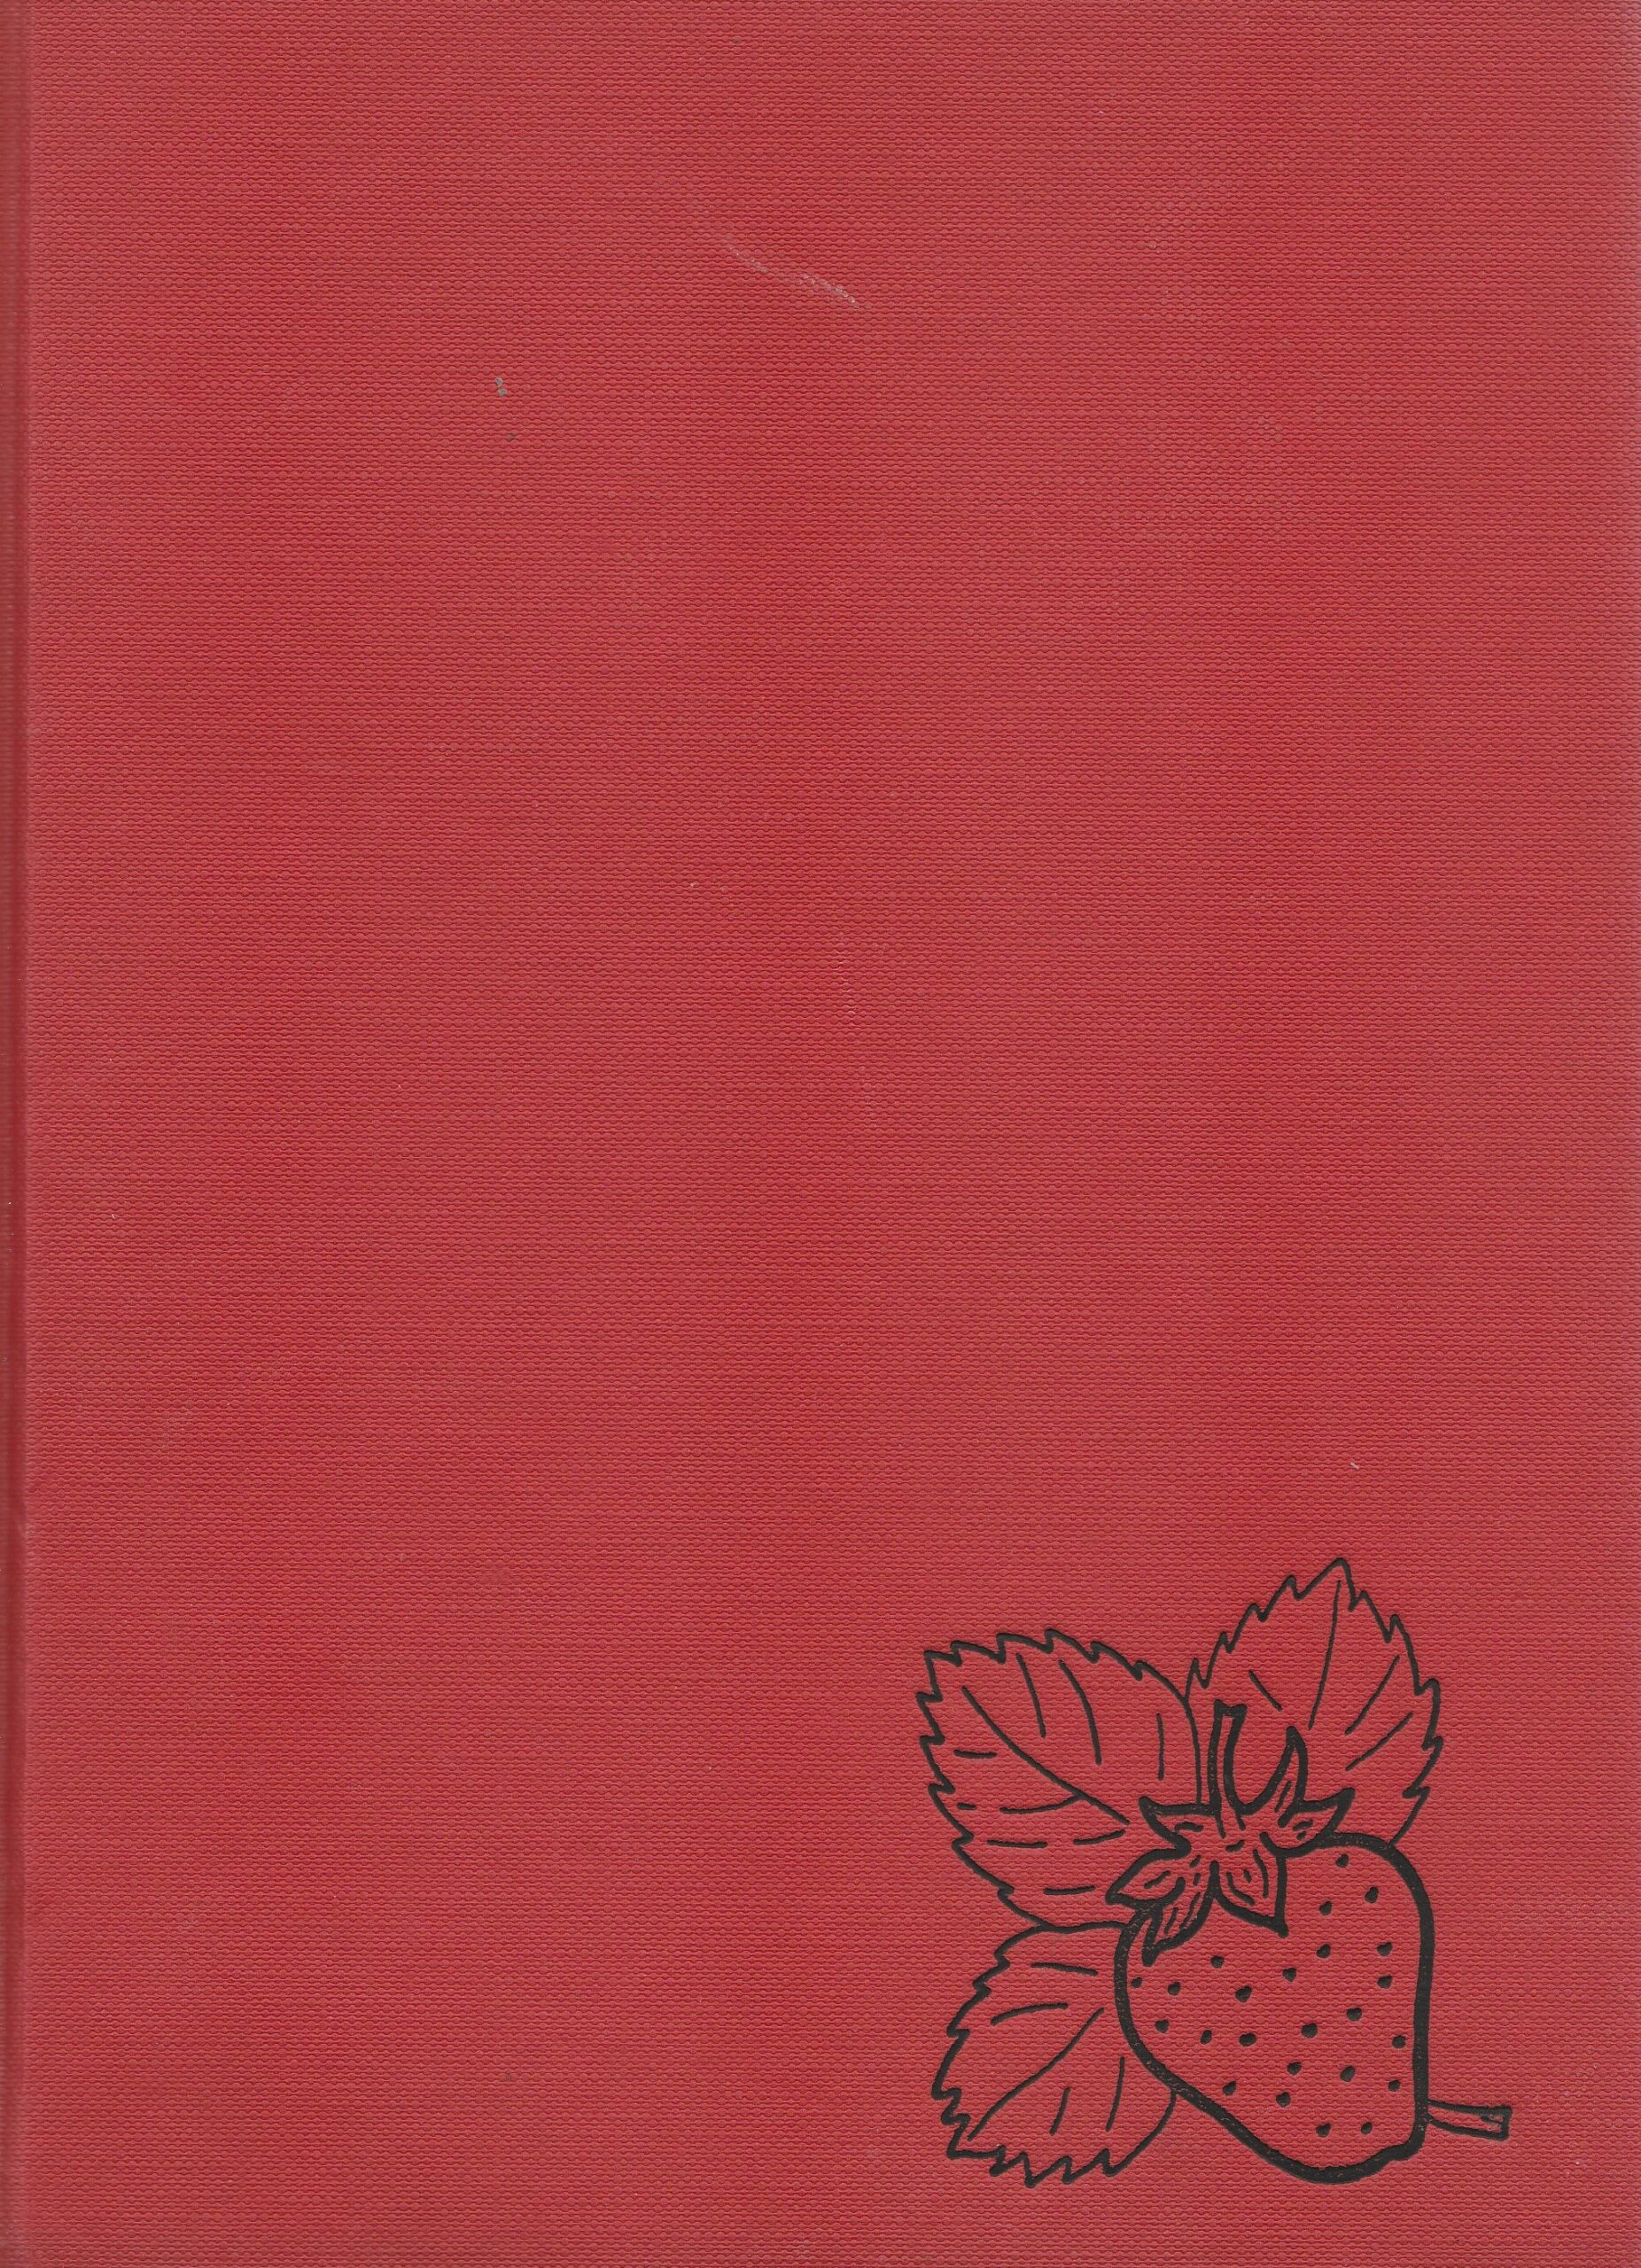 Baldini, E & Branzanti, C.-1964-2 - kopie